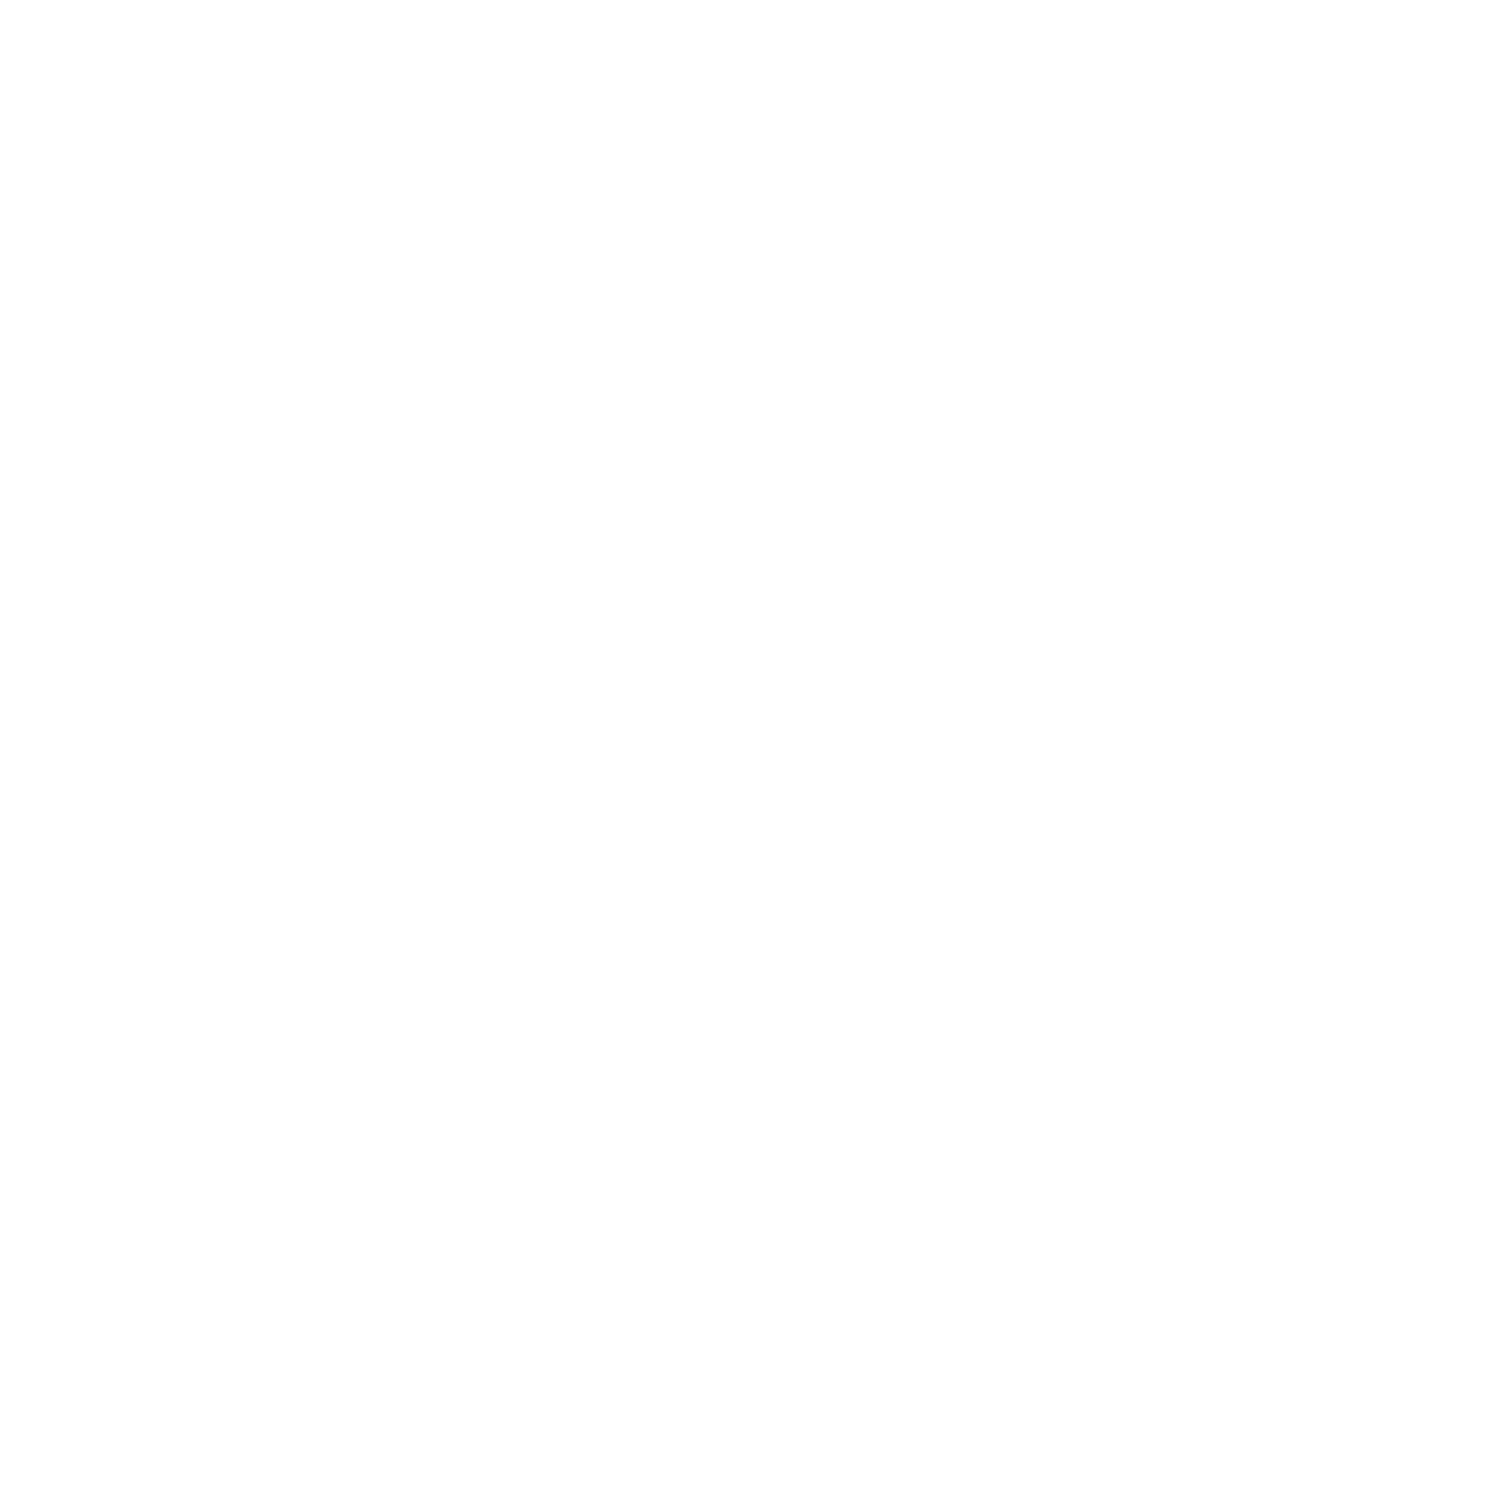 bojack horseman 2.png